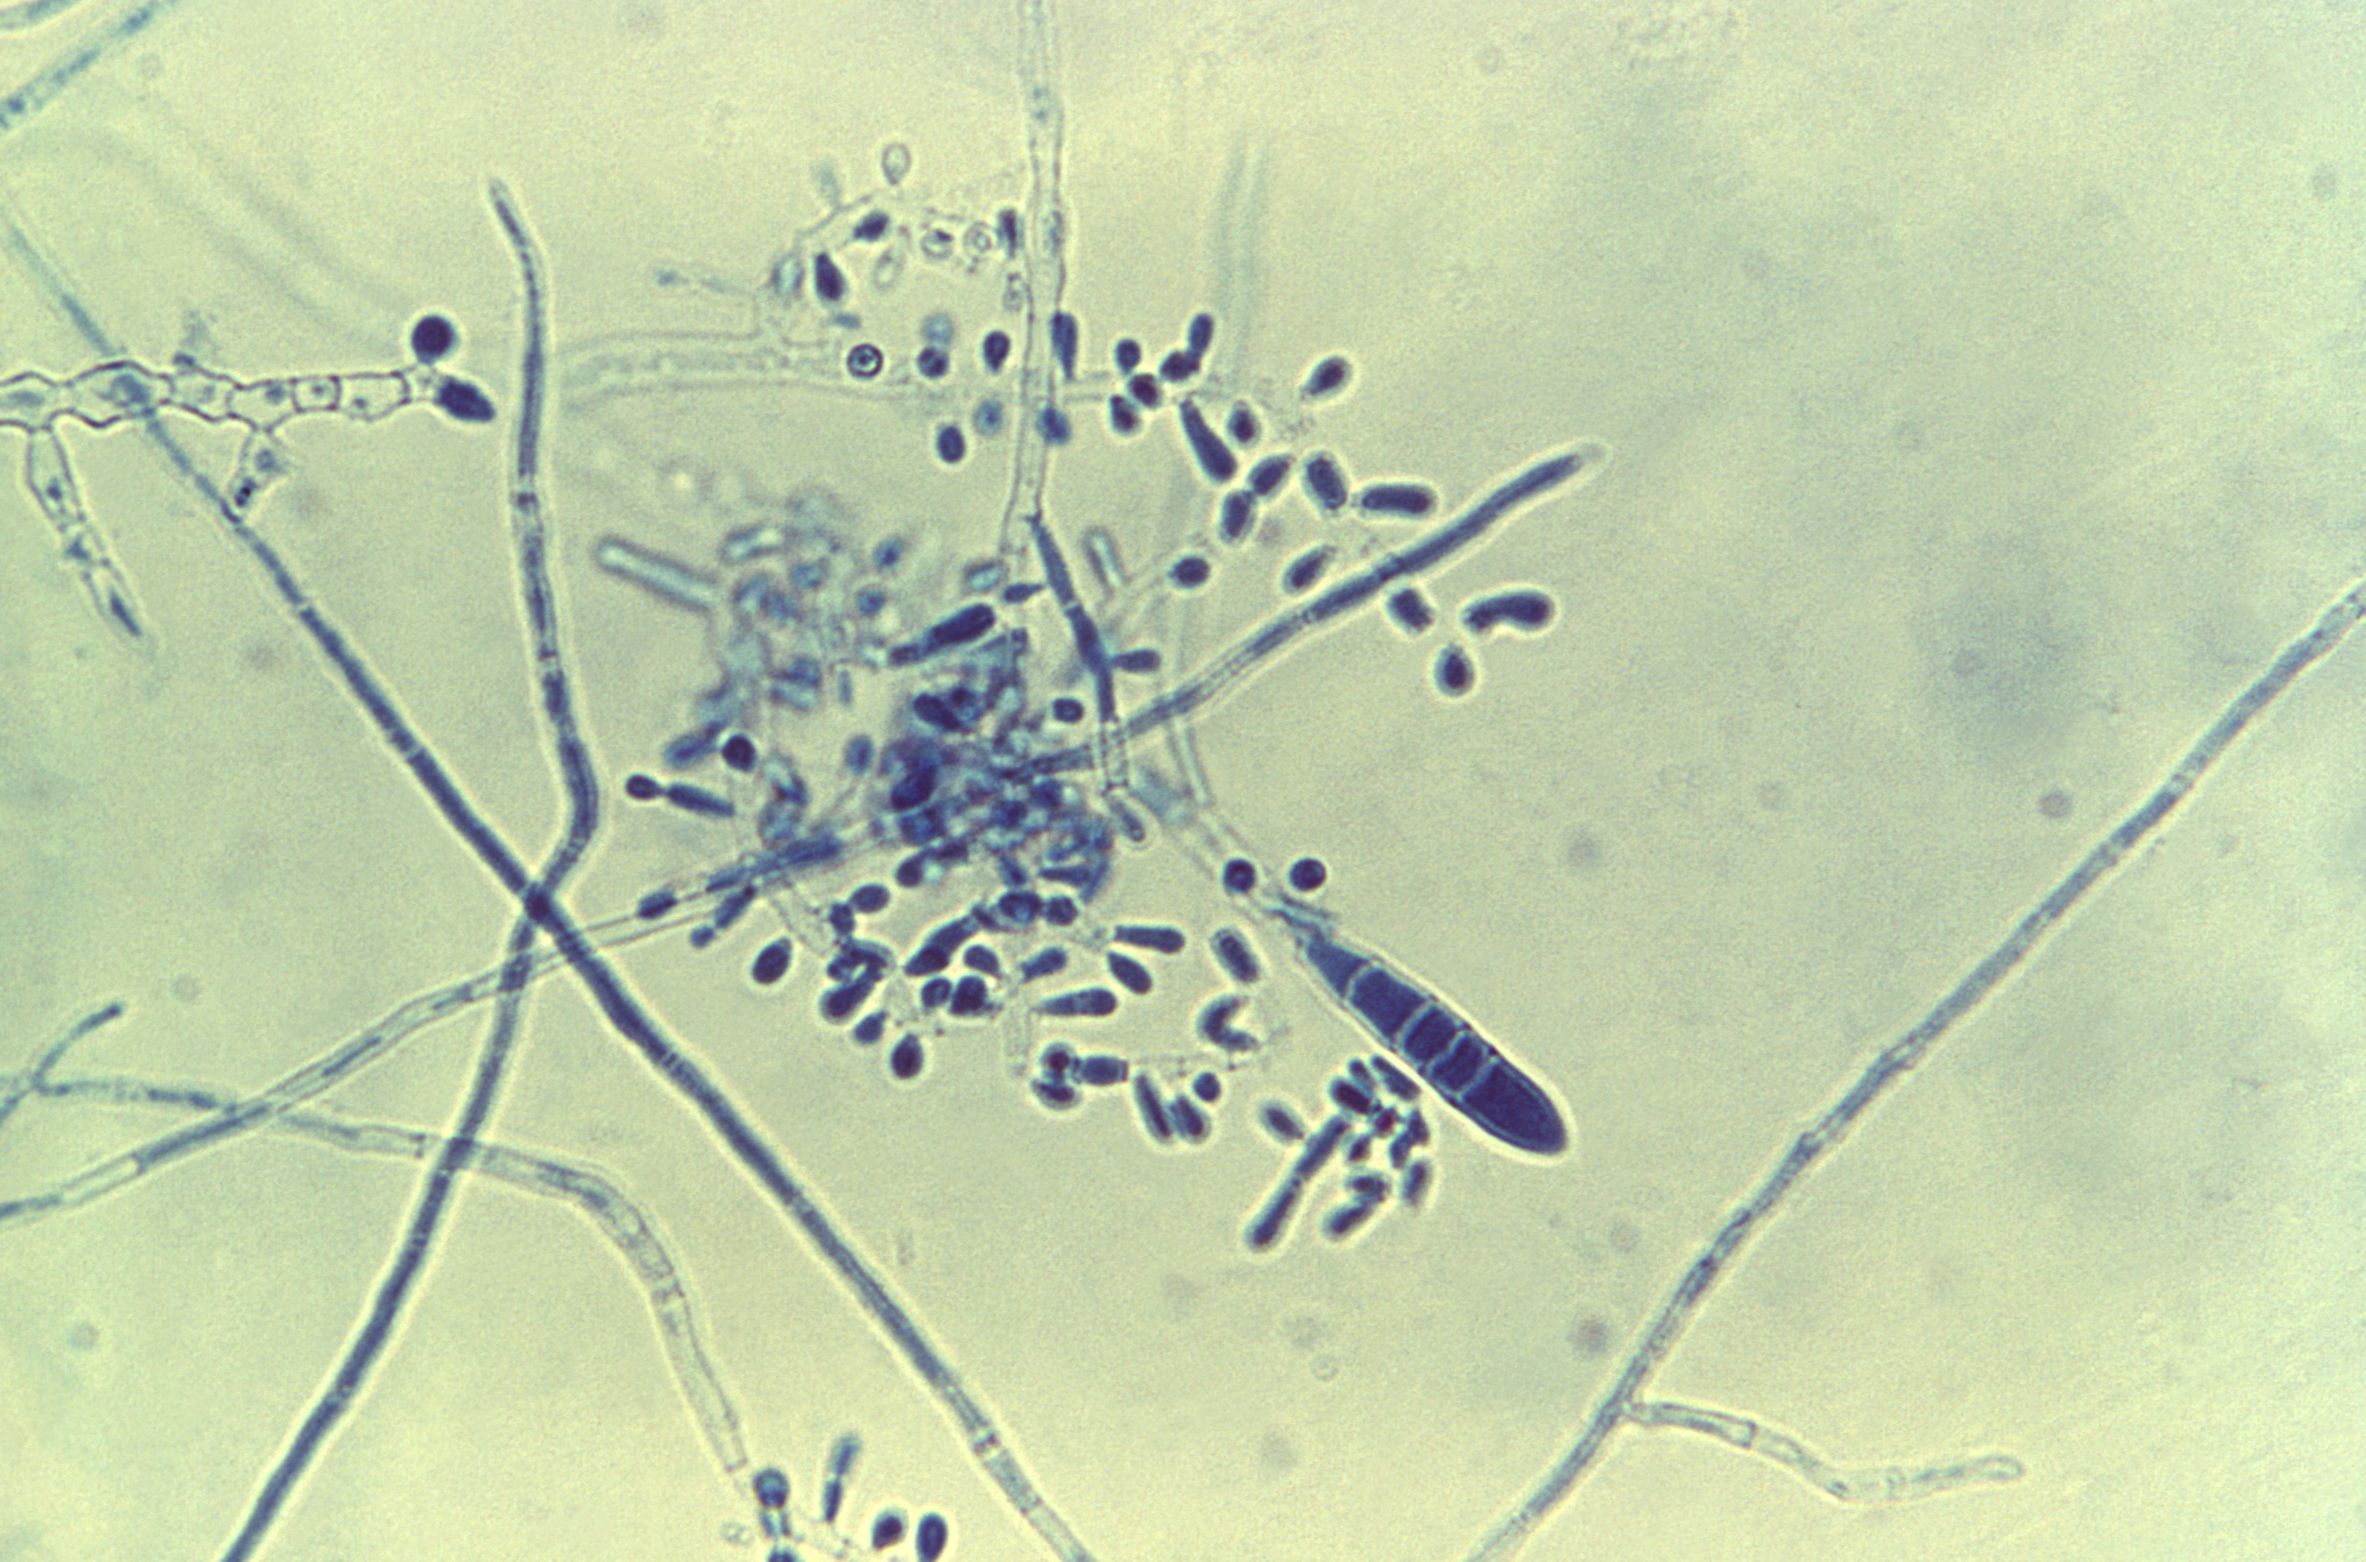 fungi microscope